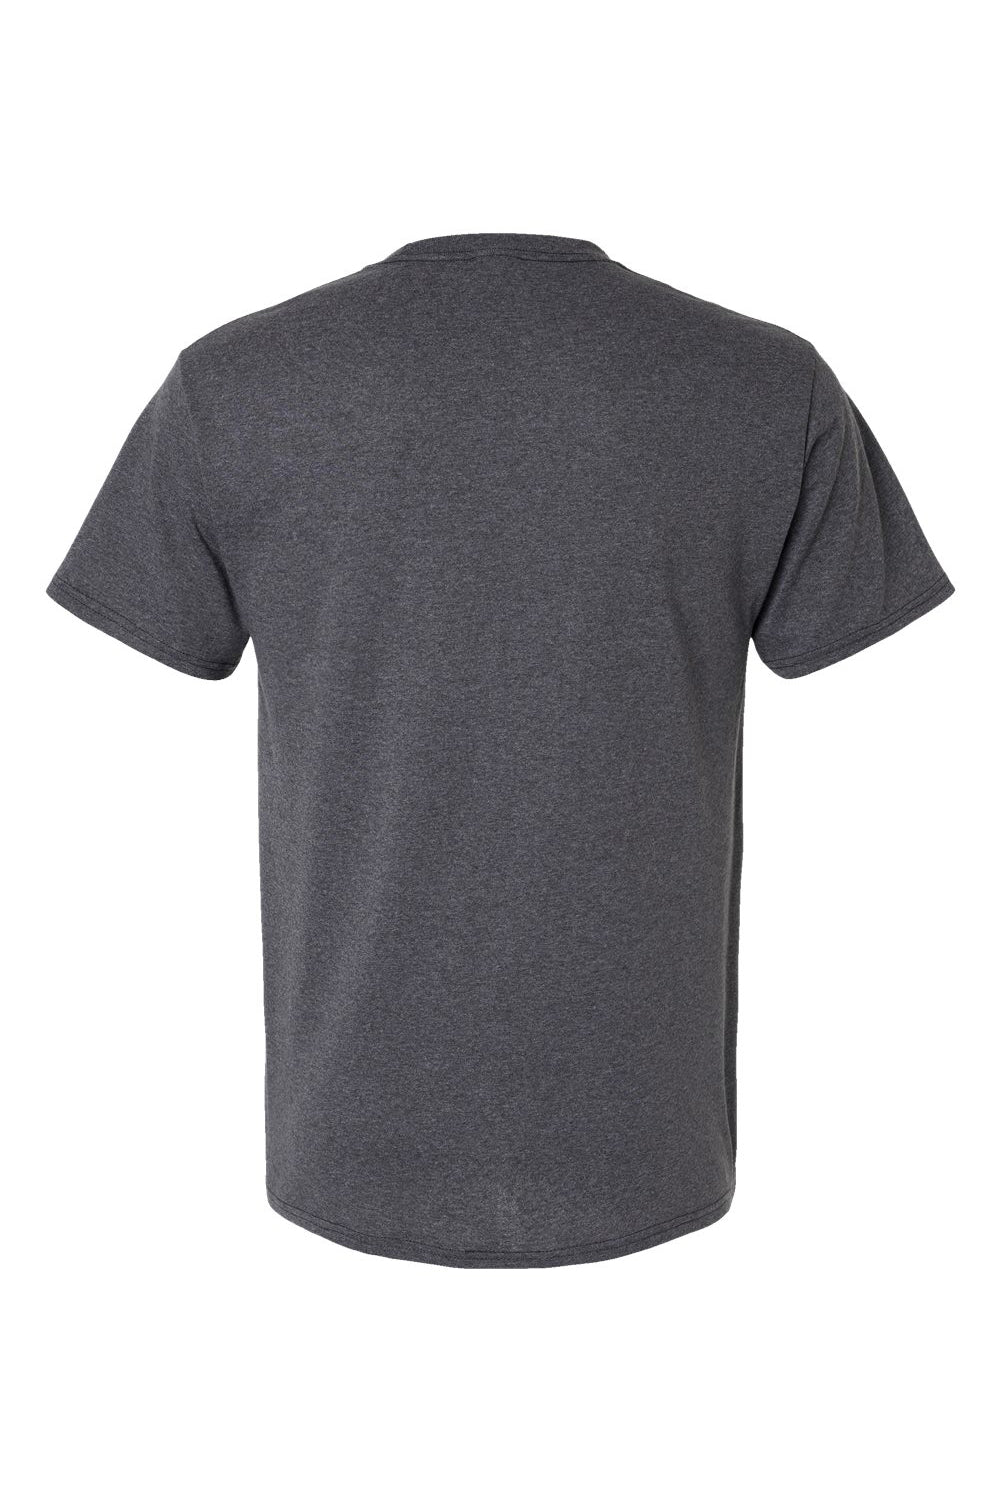 Hanes 5290P Mens Essential Short Sleeve Crewneck T-Shirt w/ Pocket Heather Charcoal Grey Flat Back